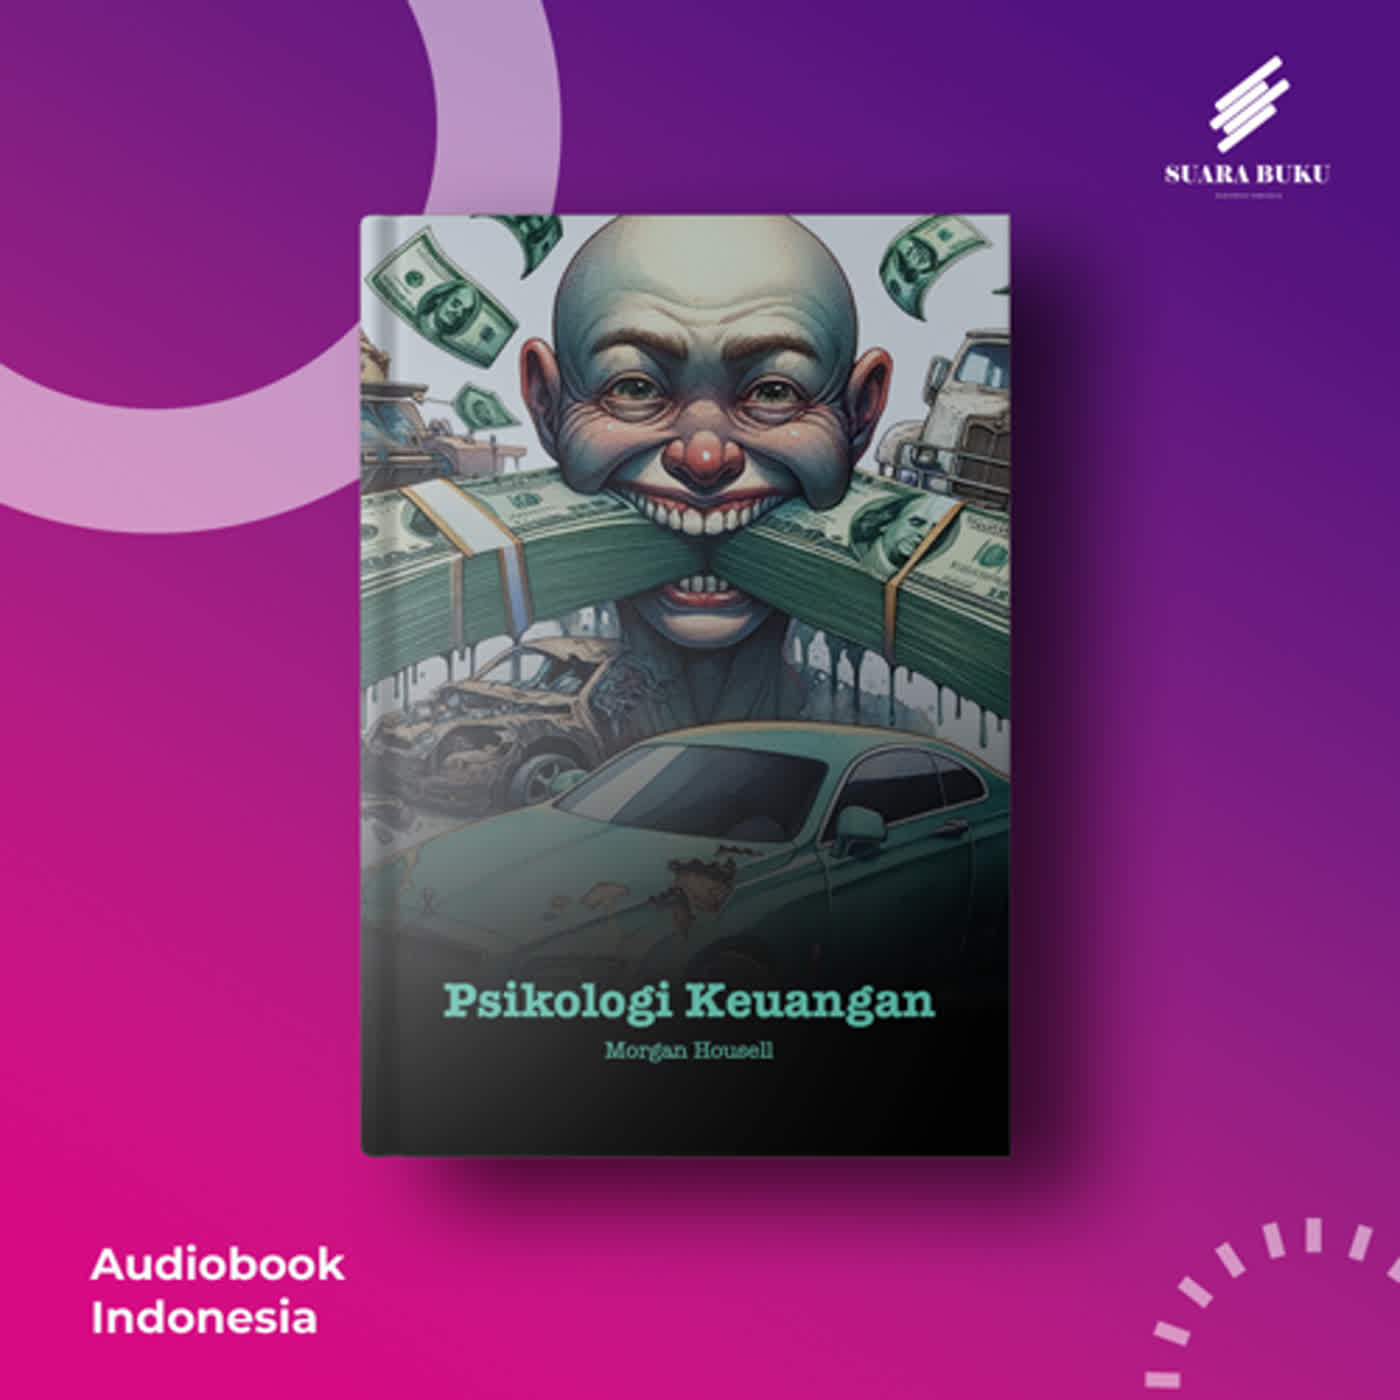 #2 Psikologi Keuangan Karya Morgan Housell - Audiobook Indonesia Suara Buku